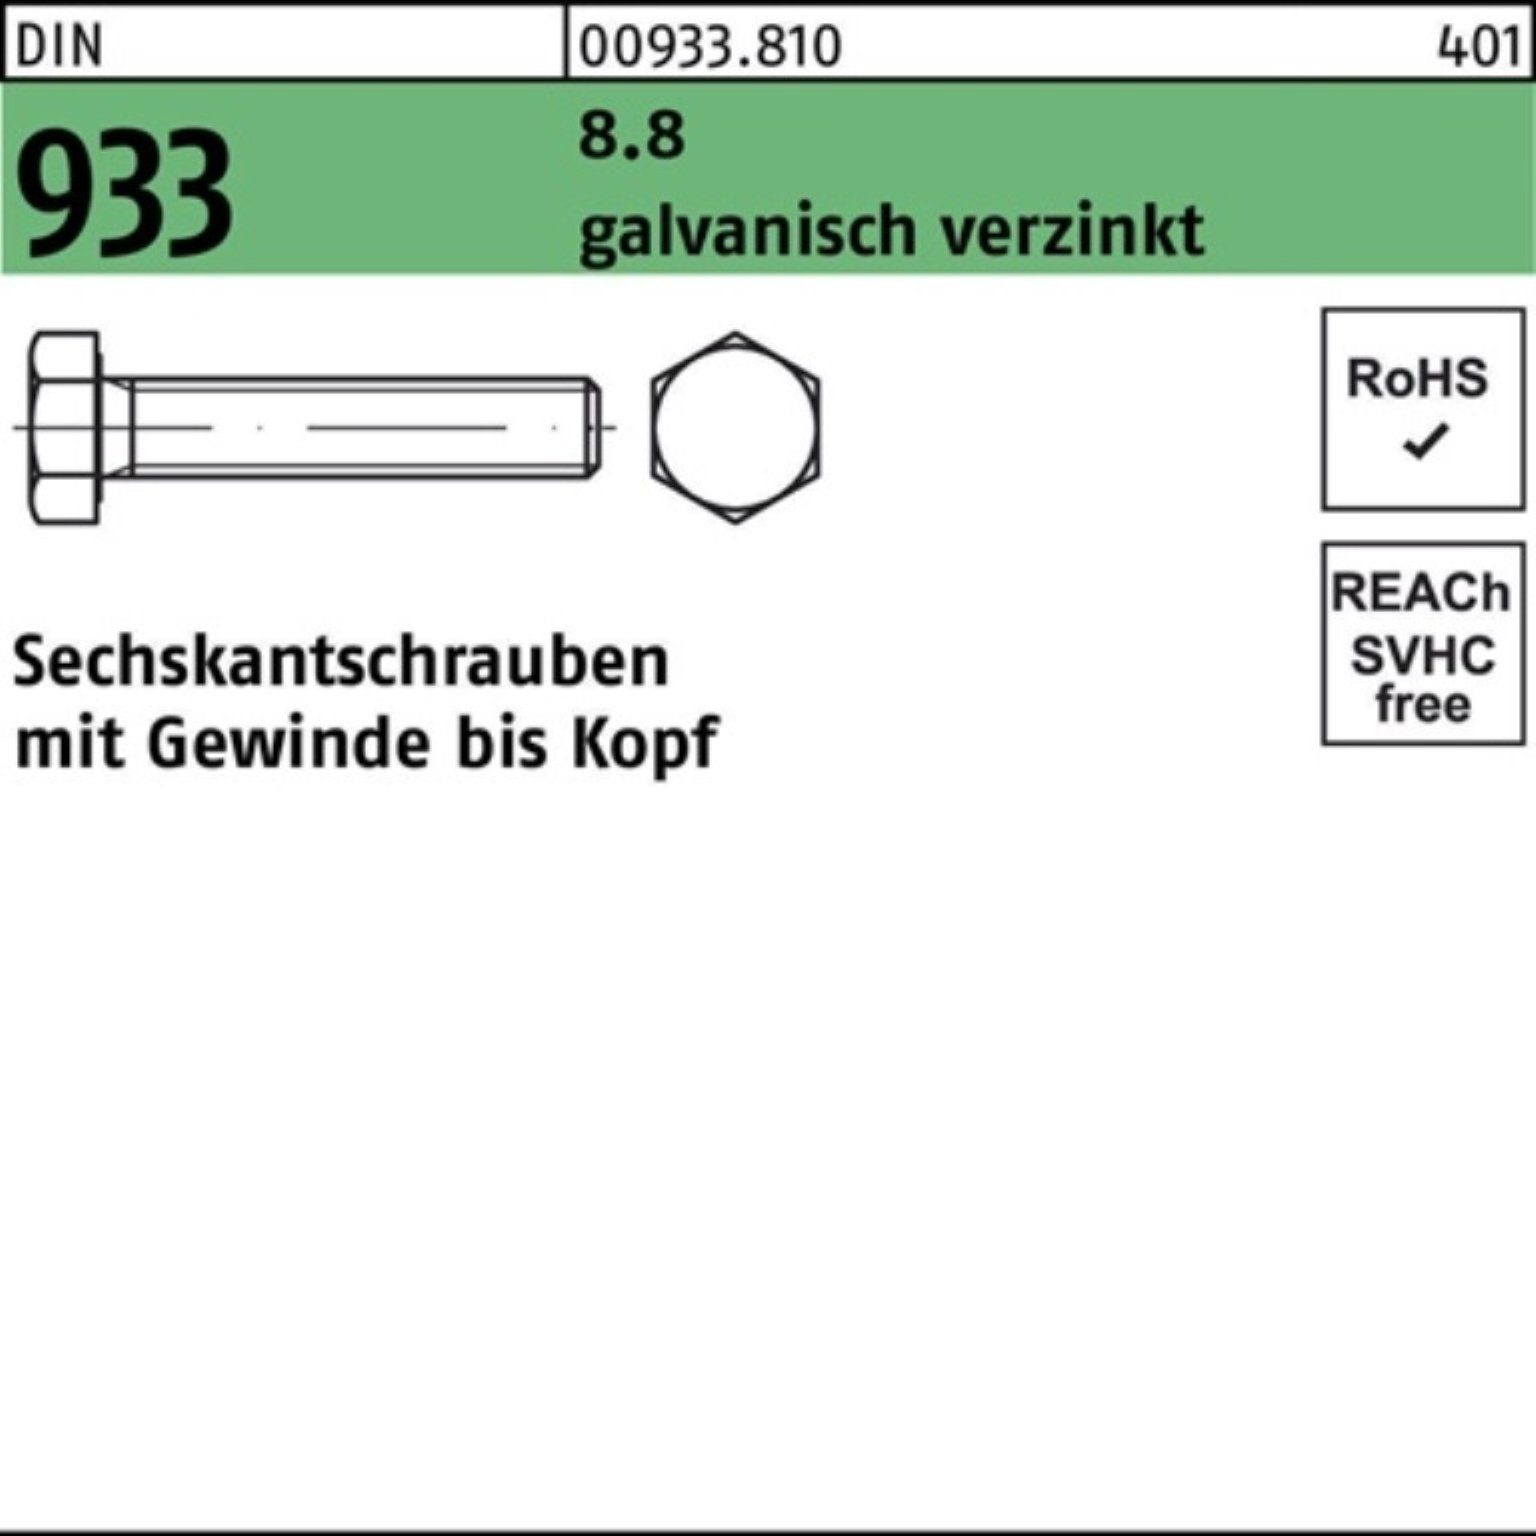 Reyher Sechskantschraube 100er Pack Sechskantschraube 8.8 M42x VG Stüc 933 1 galv.verz. DIN 60